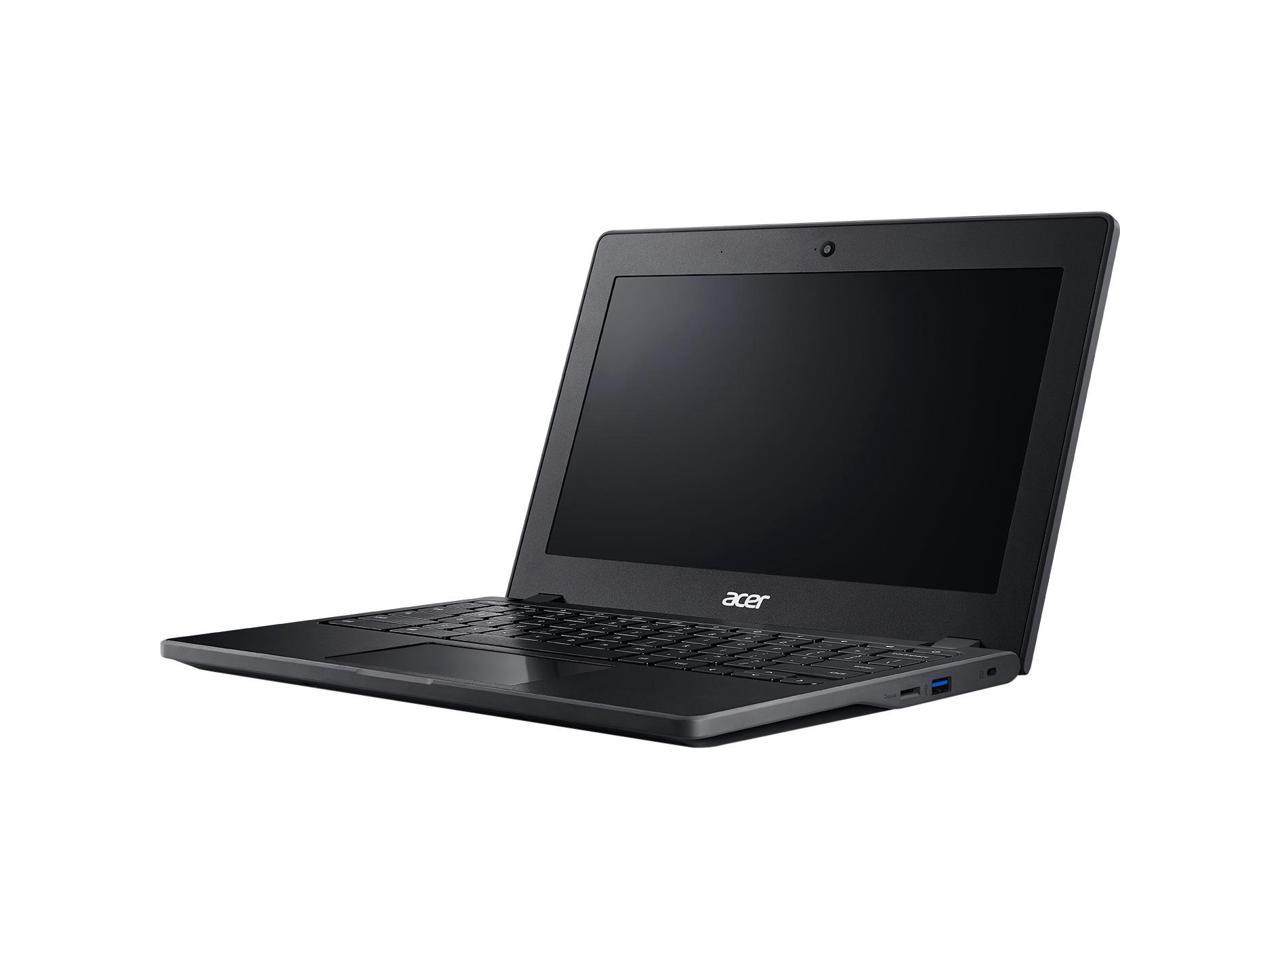 Acer C771T-56G3 Chromebook Intel Core i5 6th Gen 6200U (2.30 GHz) 8 GB LPDDR3 Memory 64 GB Flash SSD 11.6" Touchscreen Chrome OS